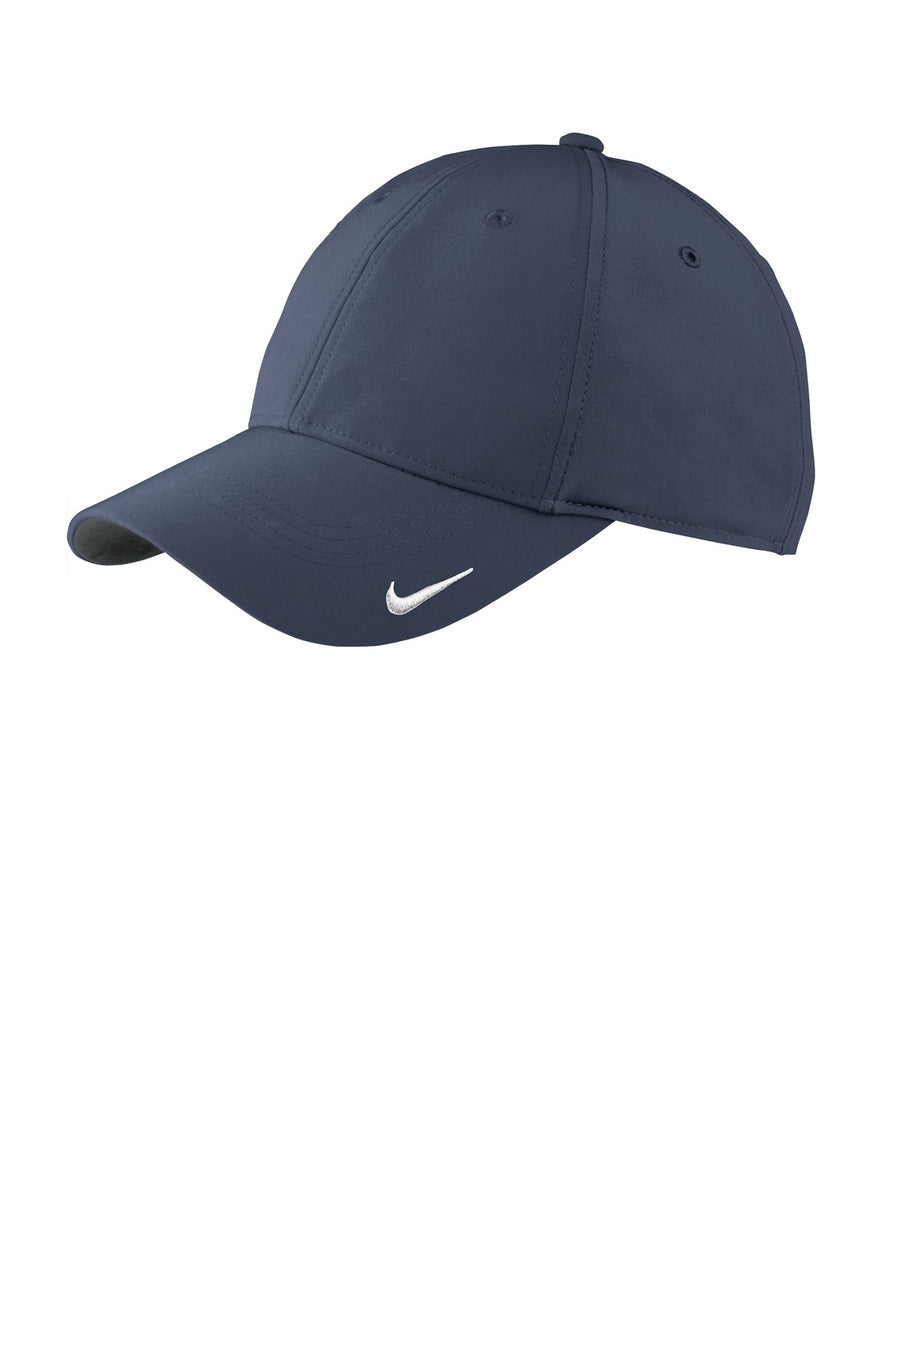 Nike Swoosh Legacy 91 Cap.